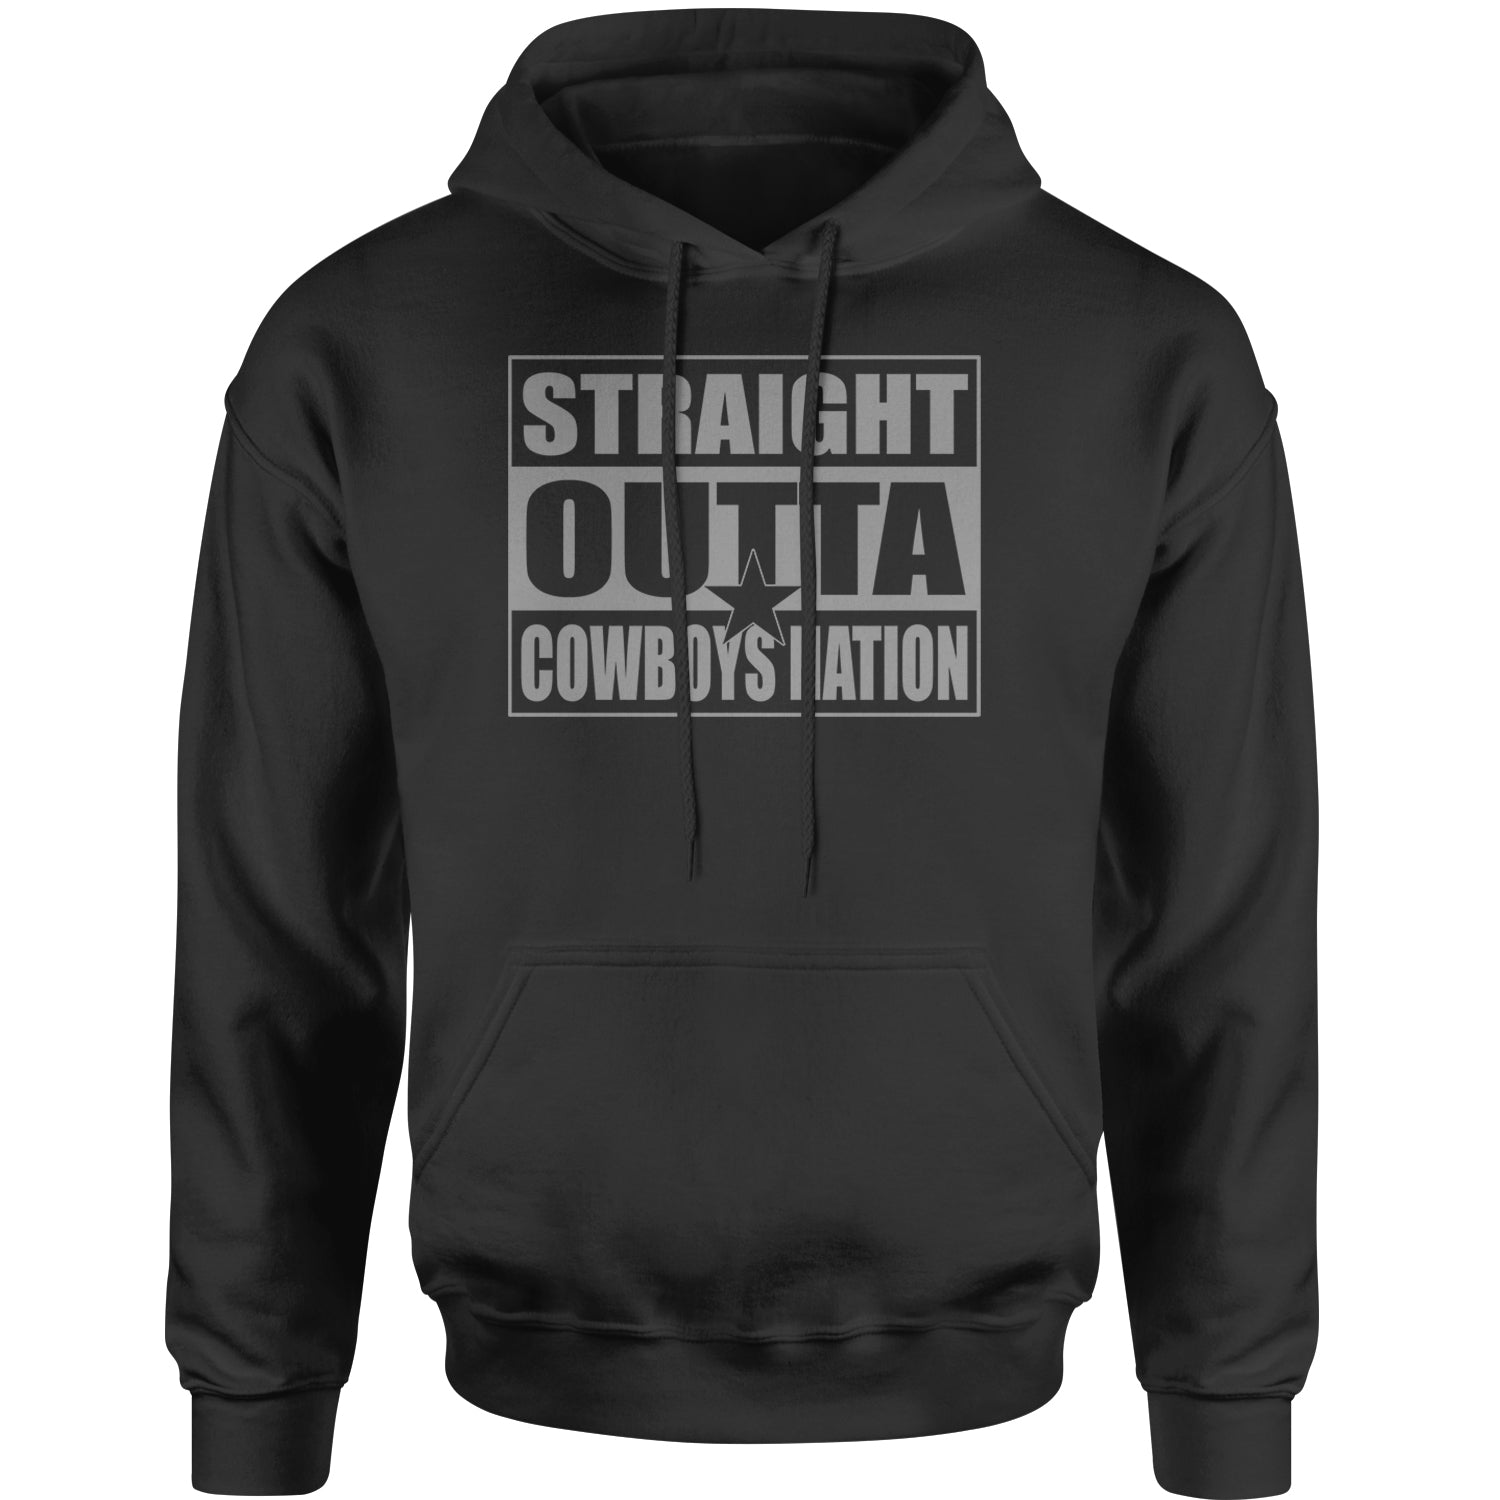 Straight Outta Cowboys Nation   Adult Hoodie Sweatshirt